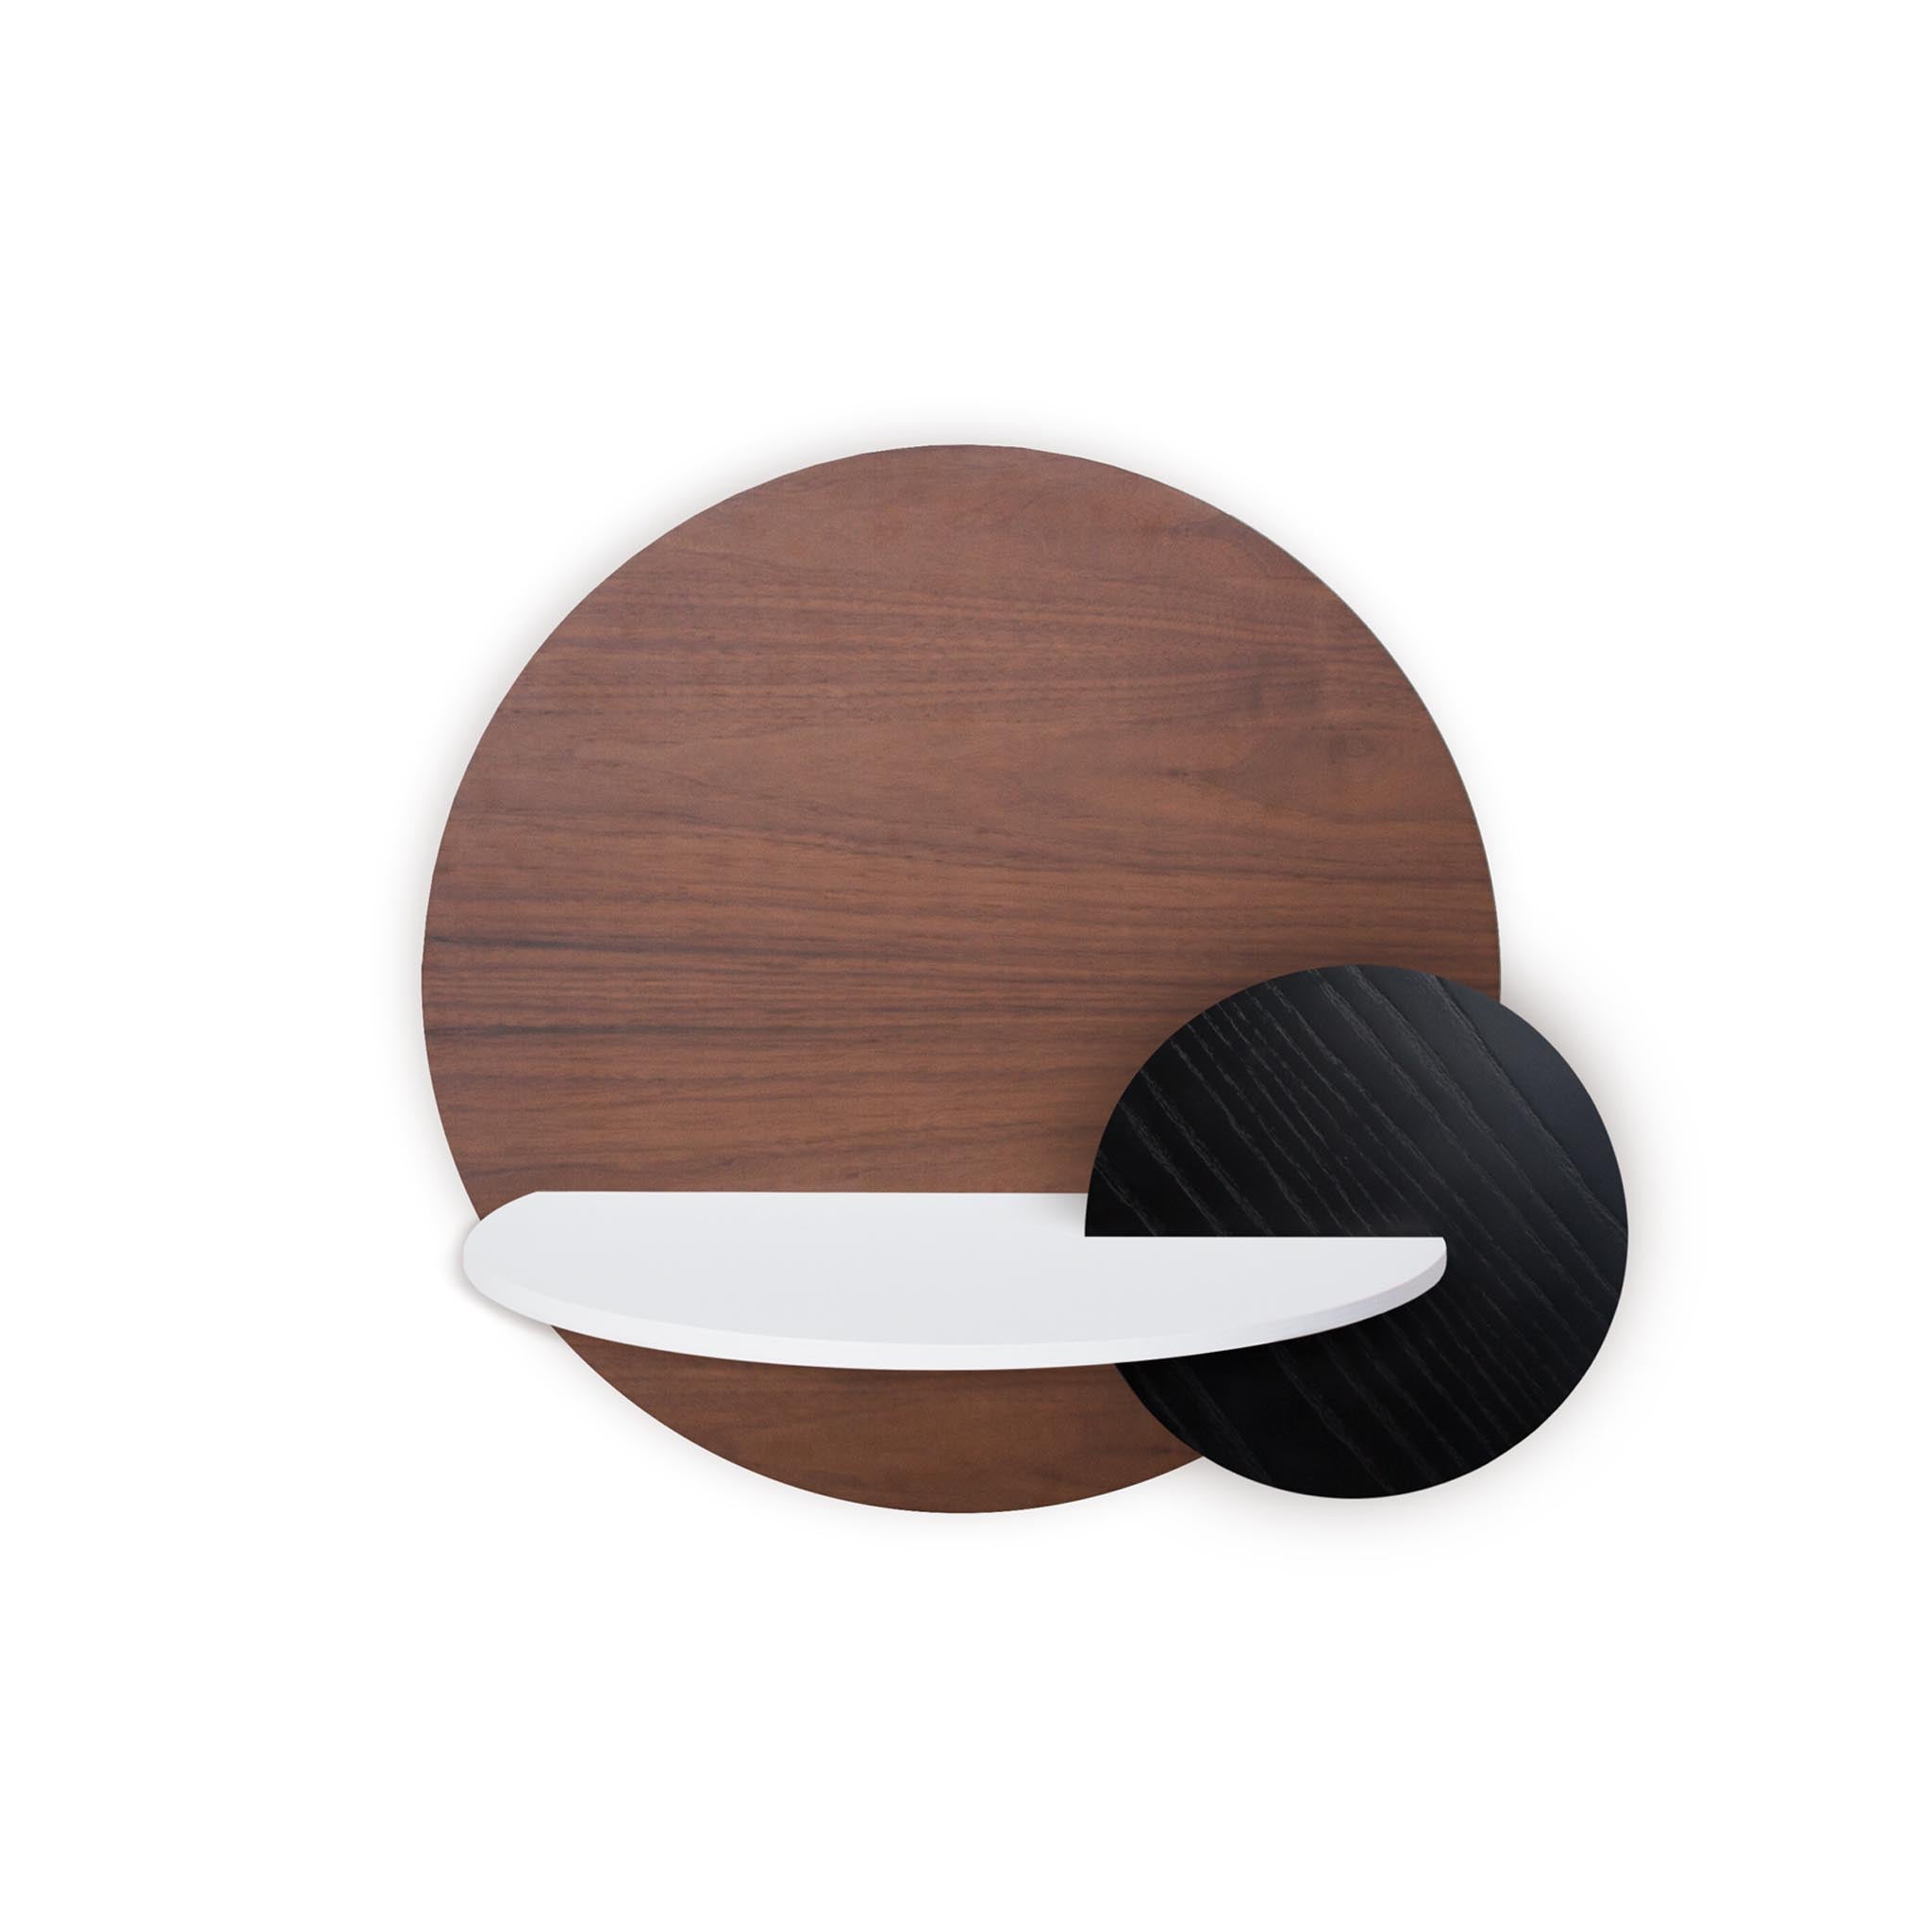 Alba floating nightstand · Walnut circle